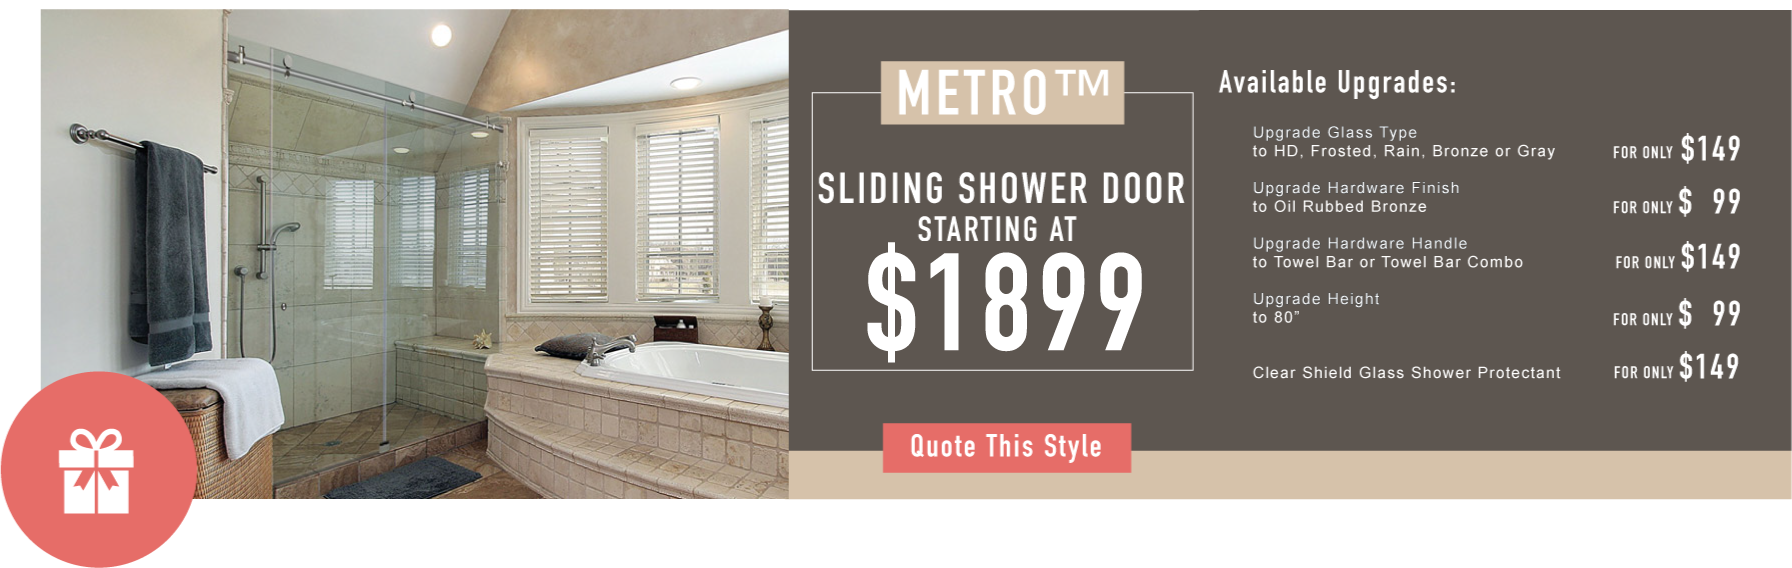 Metro Sliding Shower Doors Promo